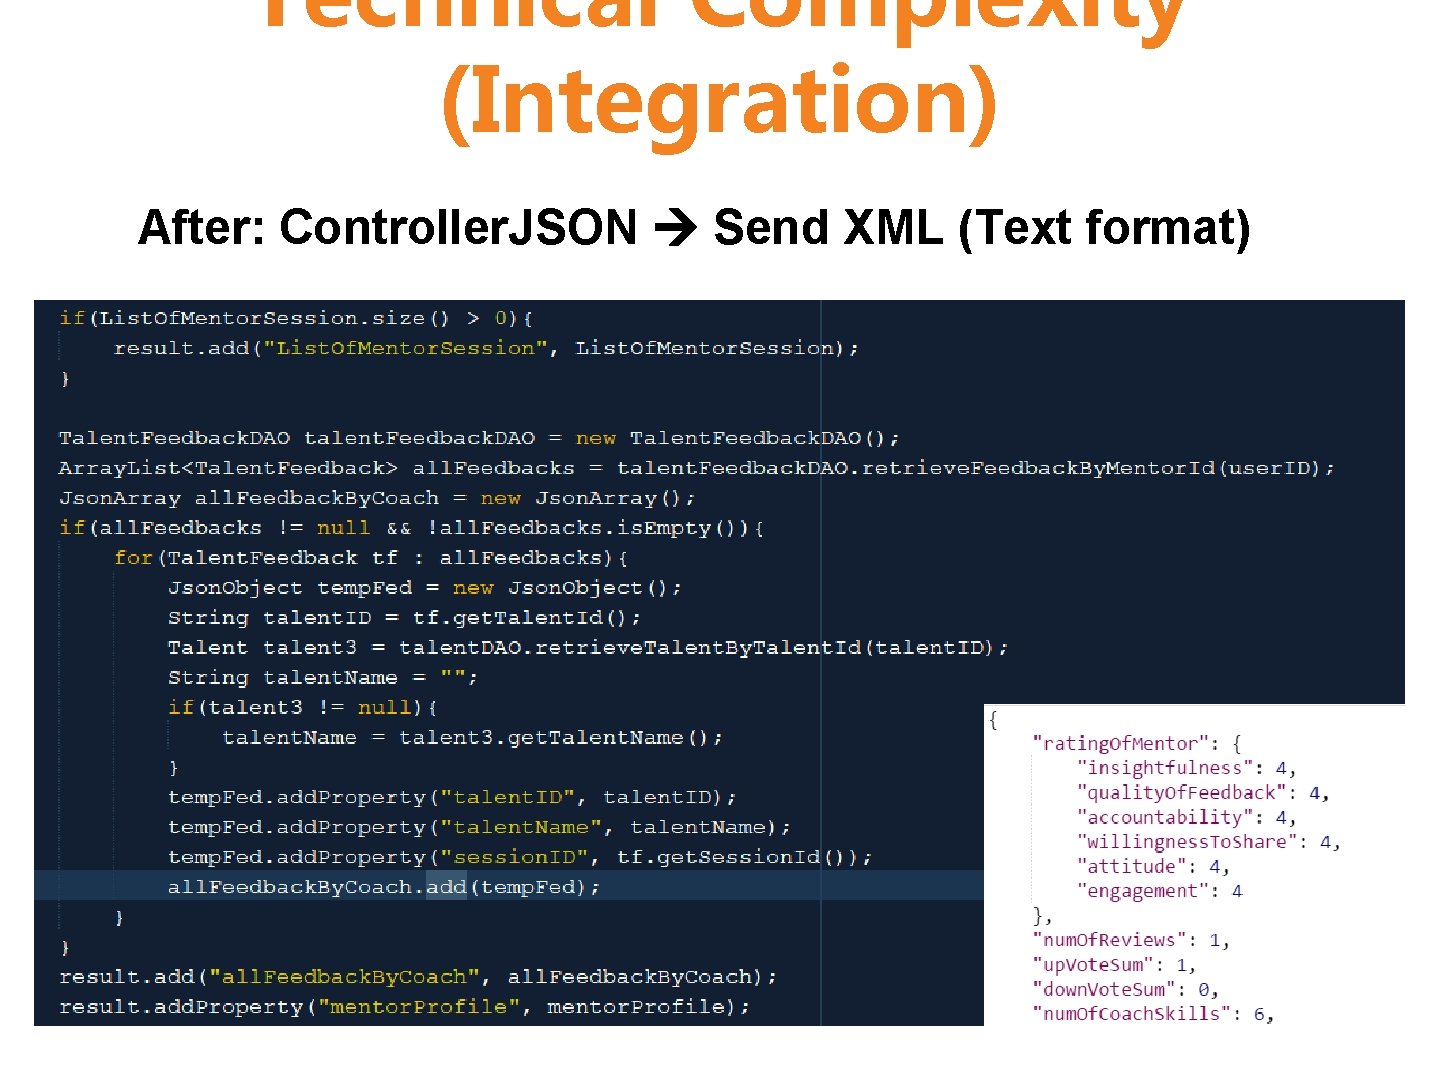 Technical Complexity (Integration) After: Controller. JSON Send XML (Text format) 